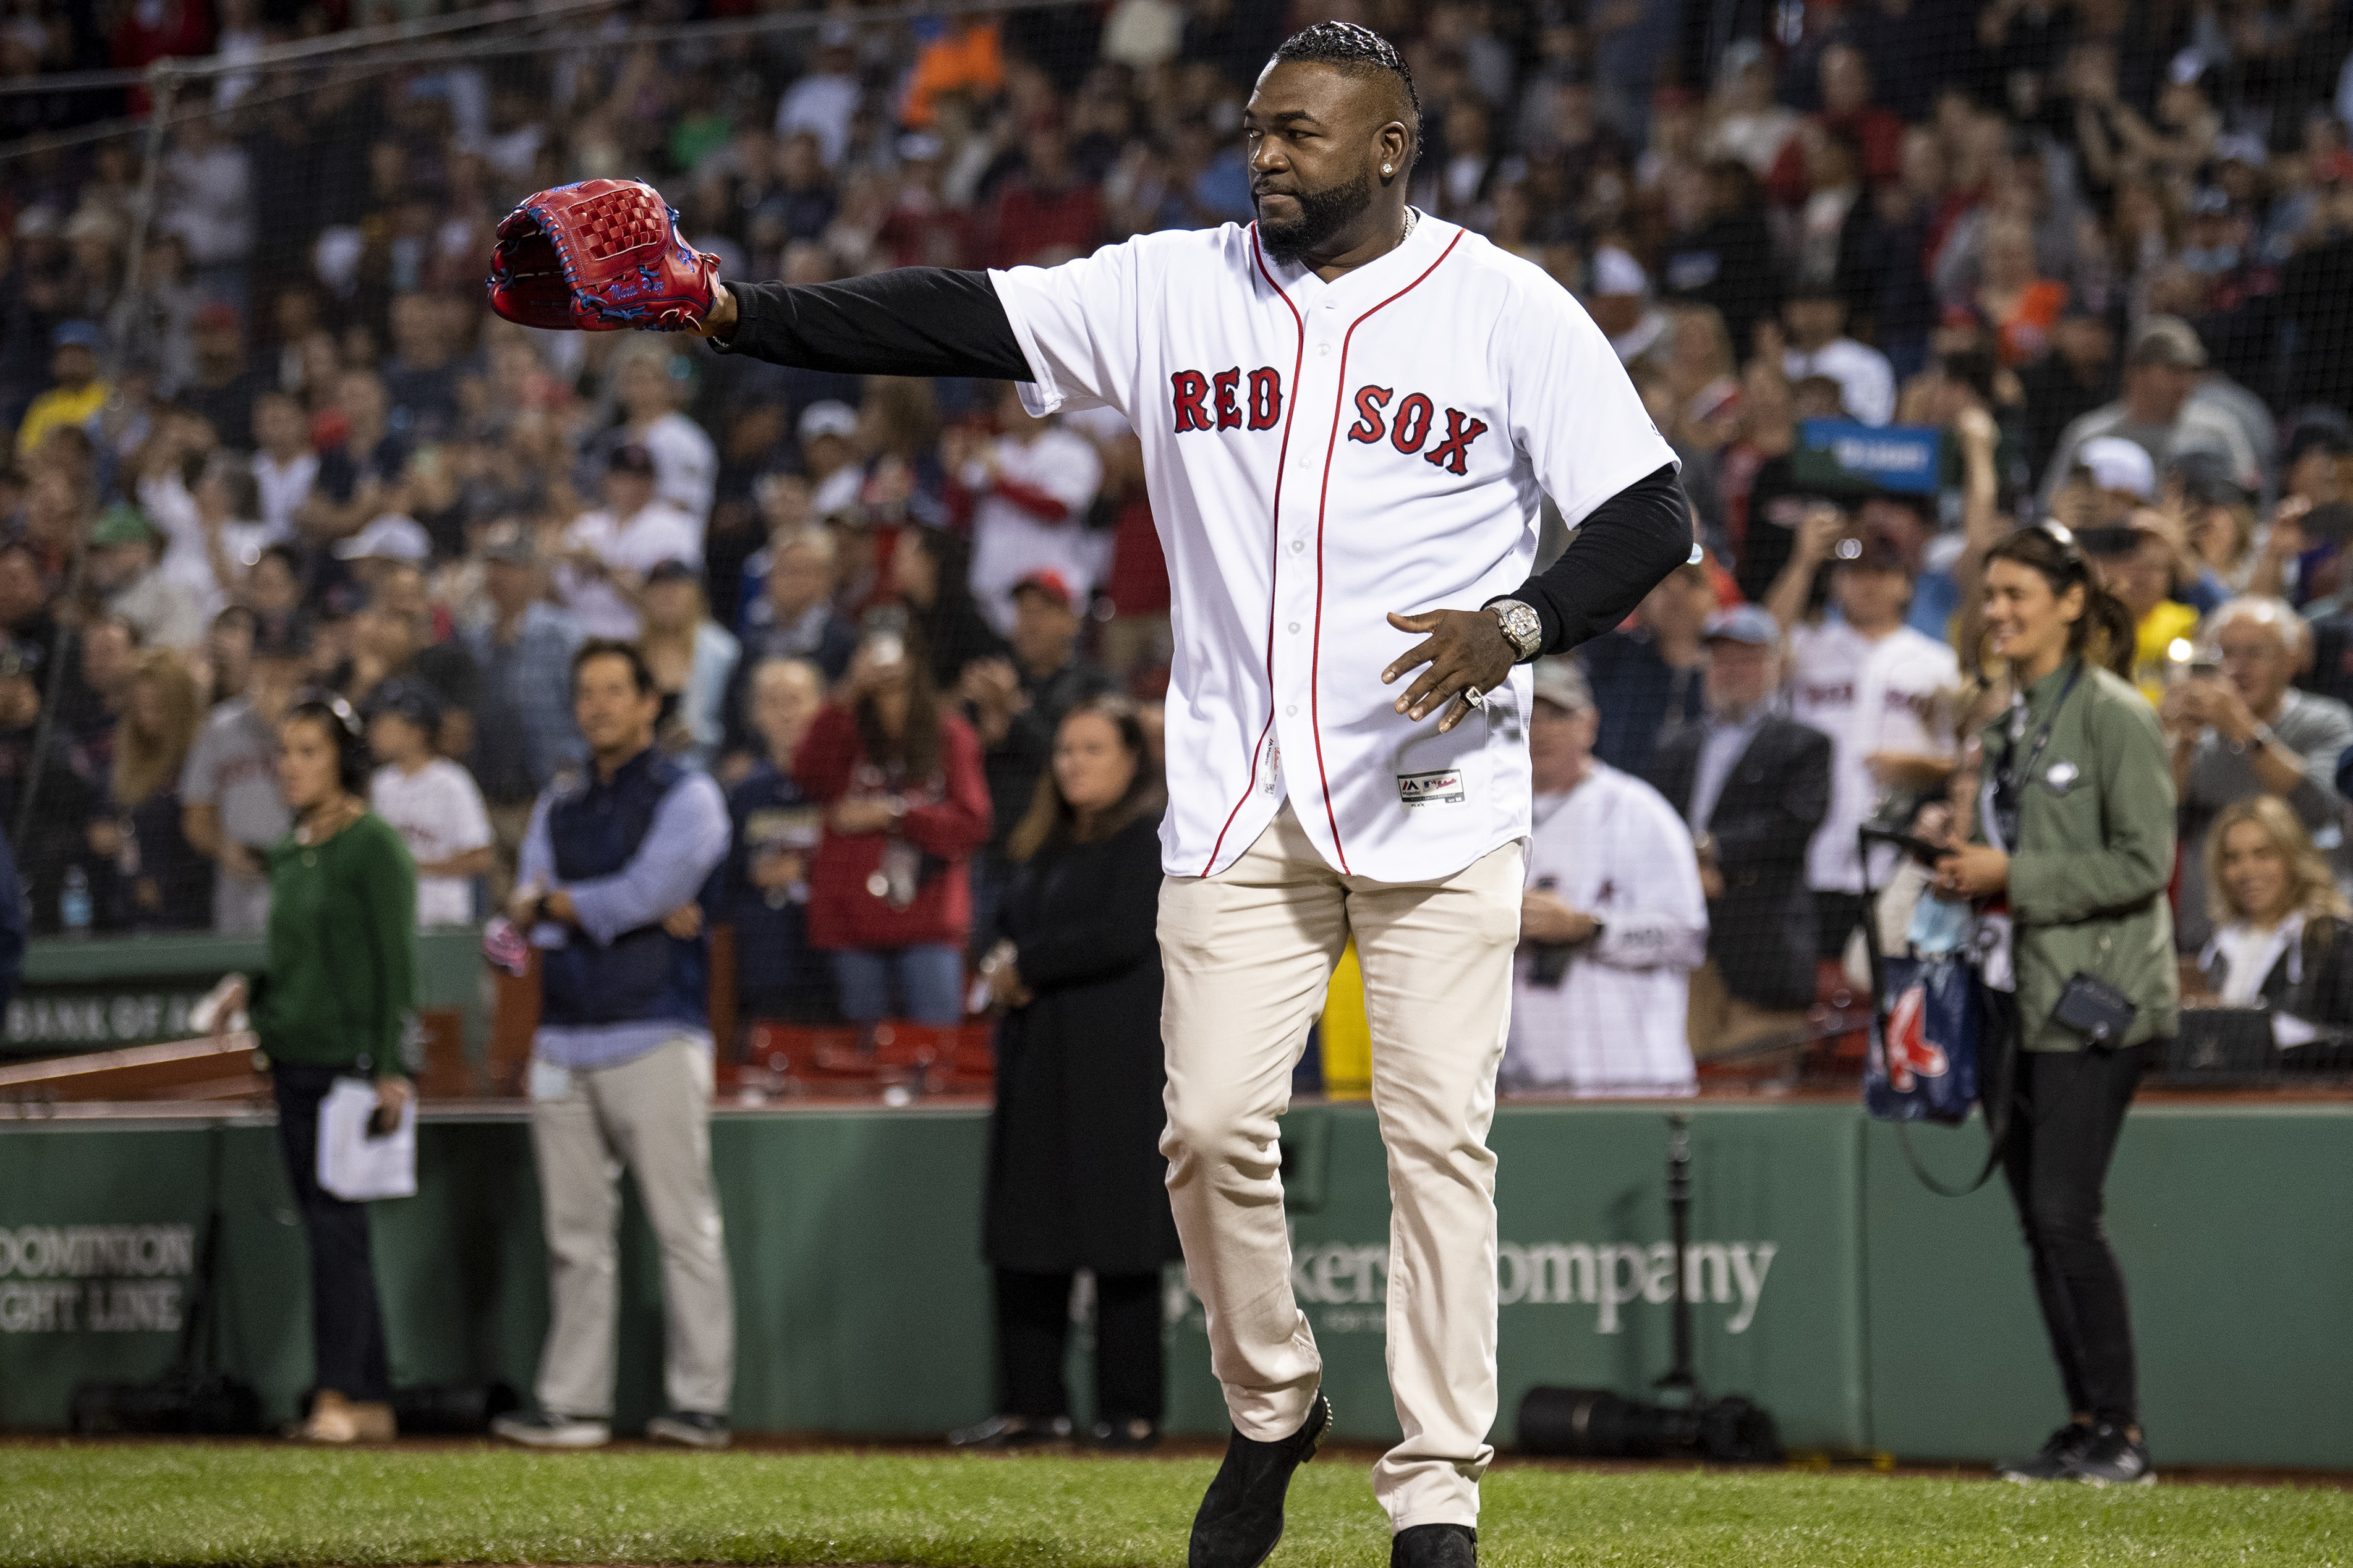 Mens Majestic Boston Red Sox ROGER CLEMENS Baseball Jersey GRAY